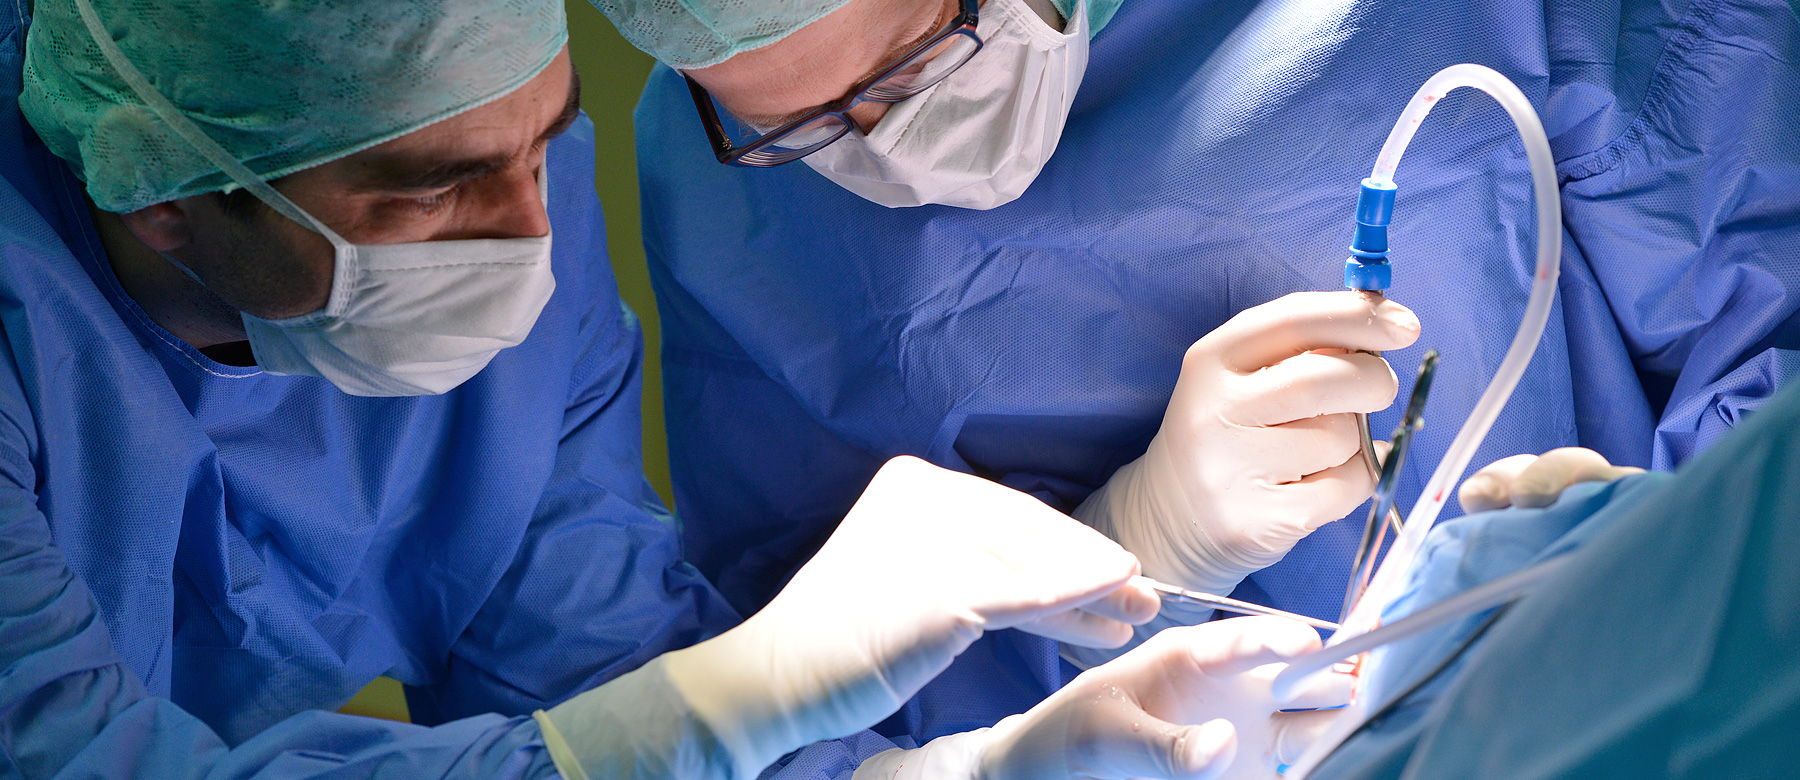 Zwei Neurochirurgen operieren einen Patienten.